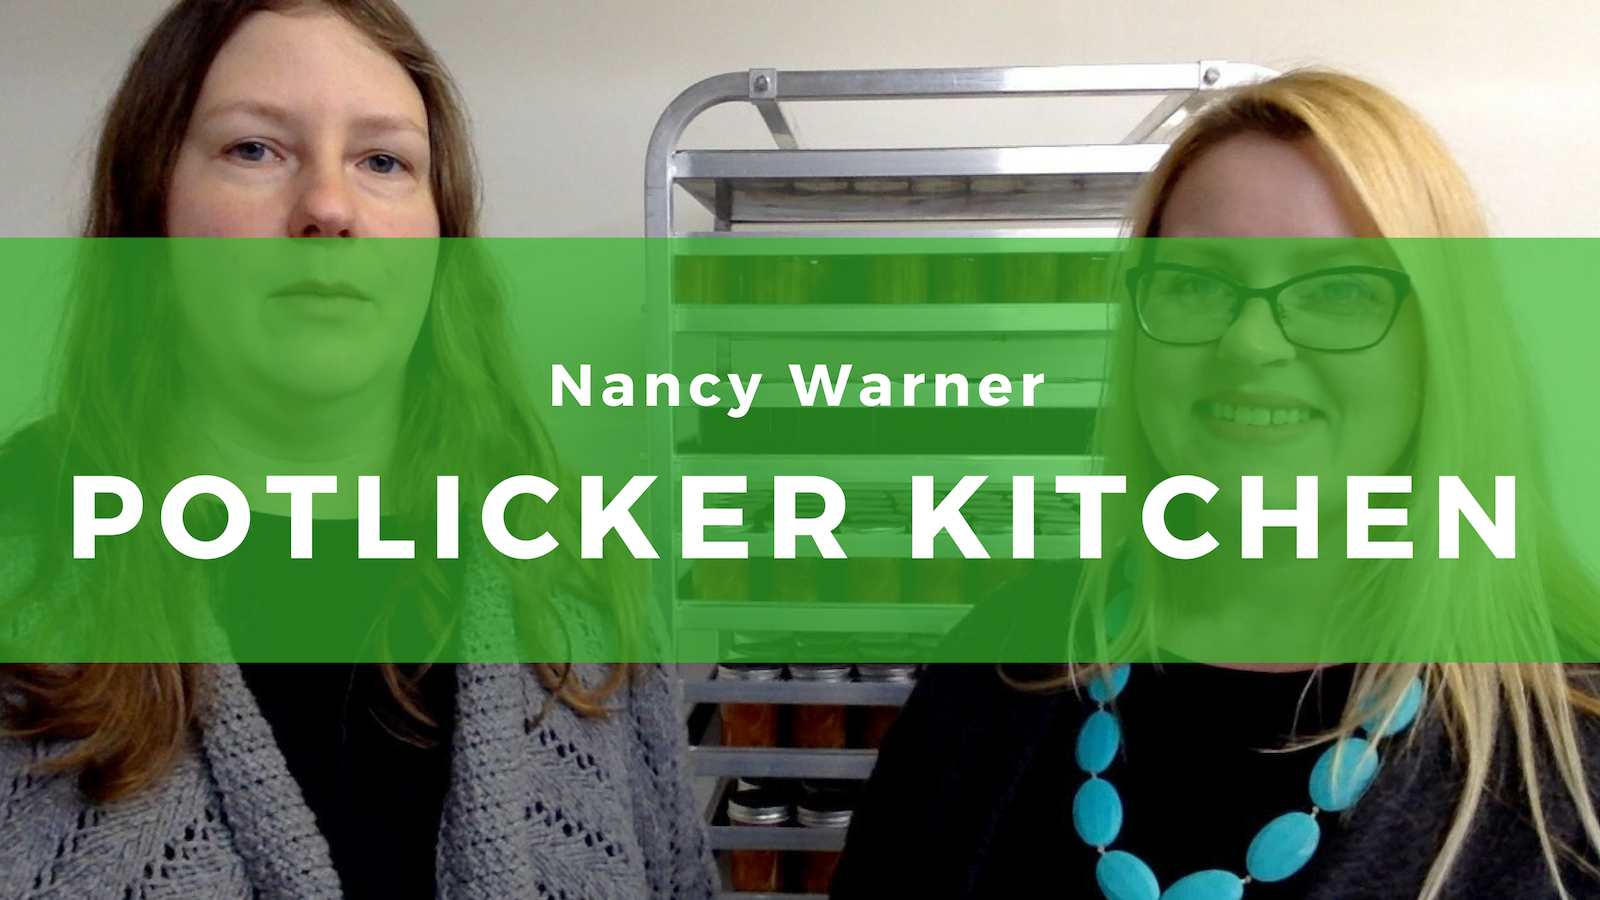 Interview with Nancy Warner